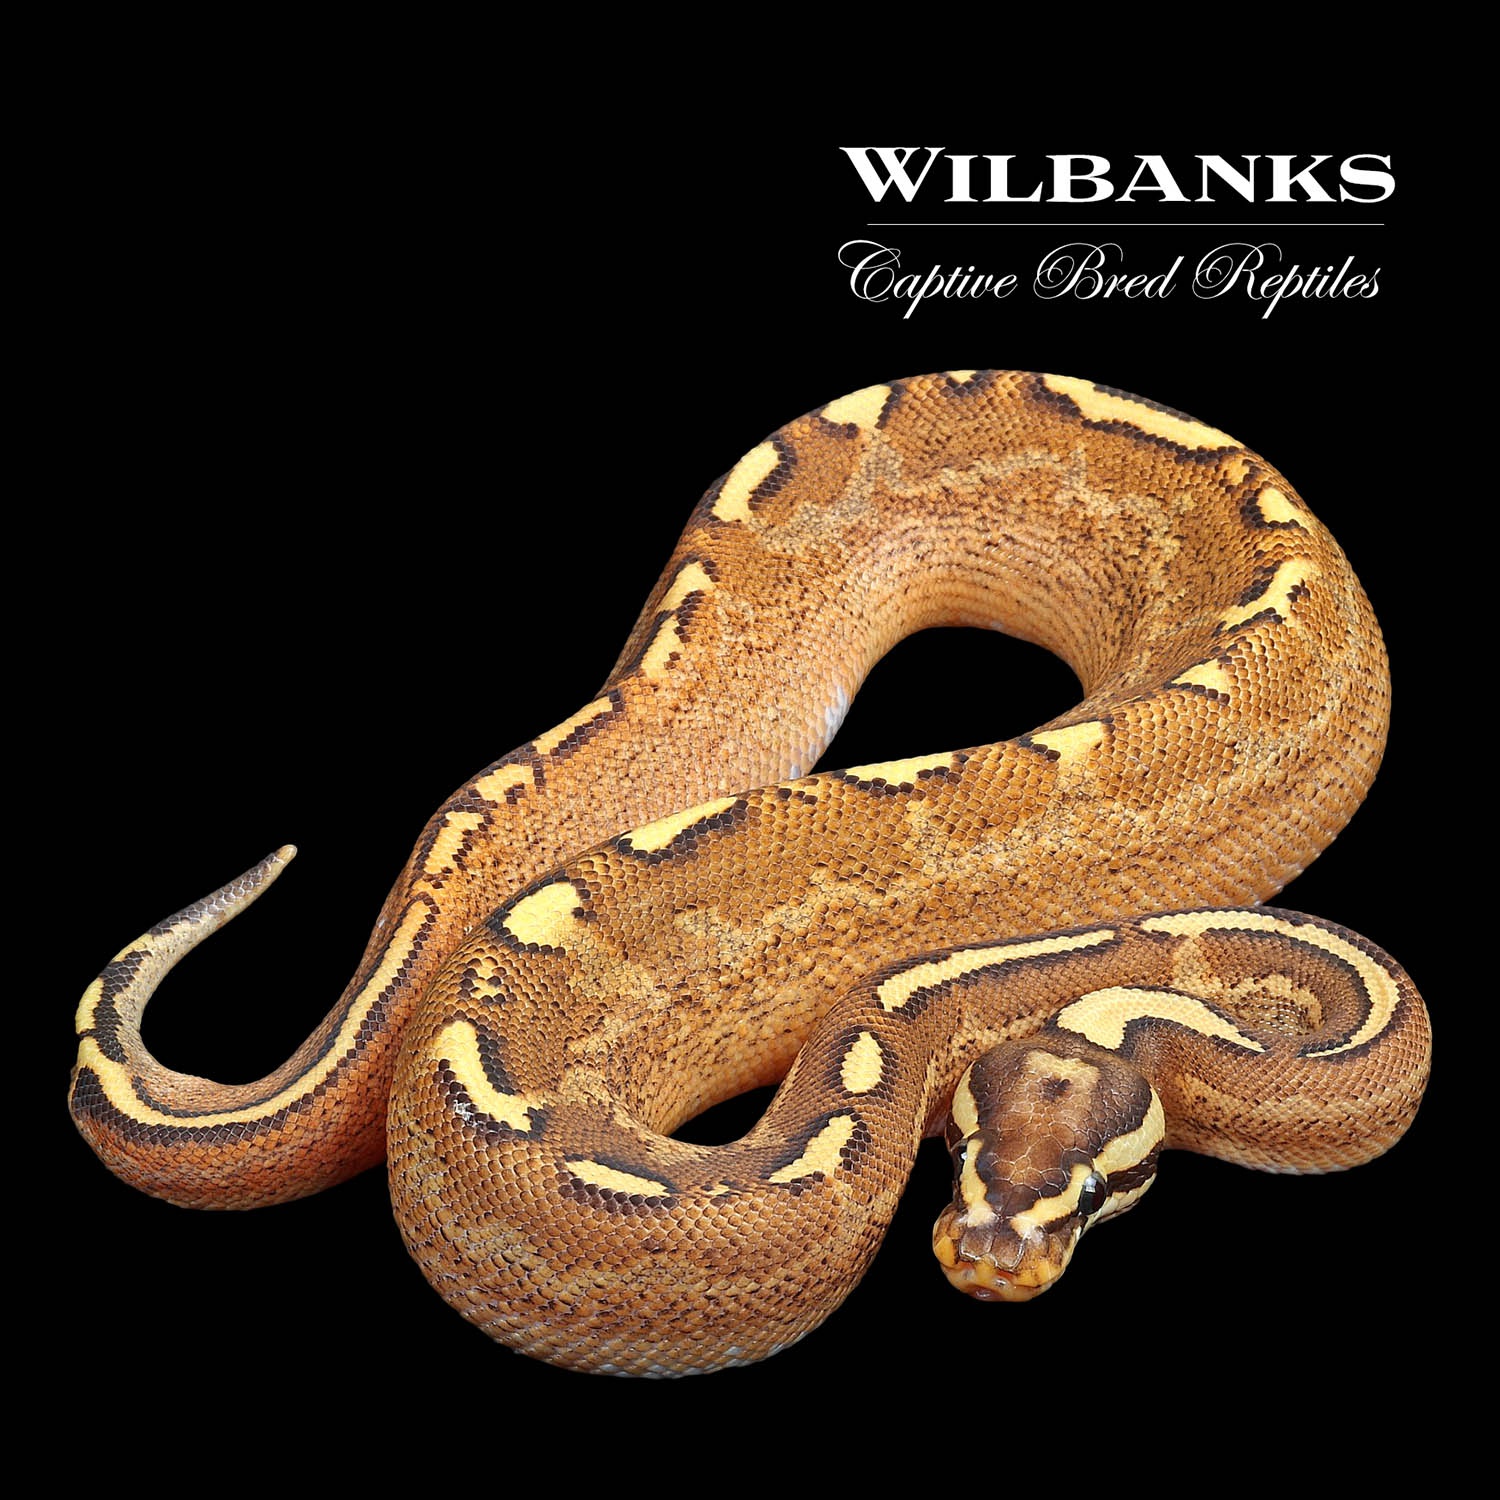 Sugar Asphalt Spark Ball Python by Wilbanks Captive Bred Reptiles